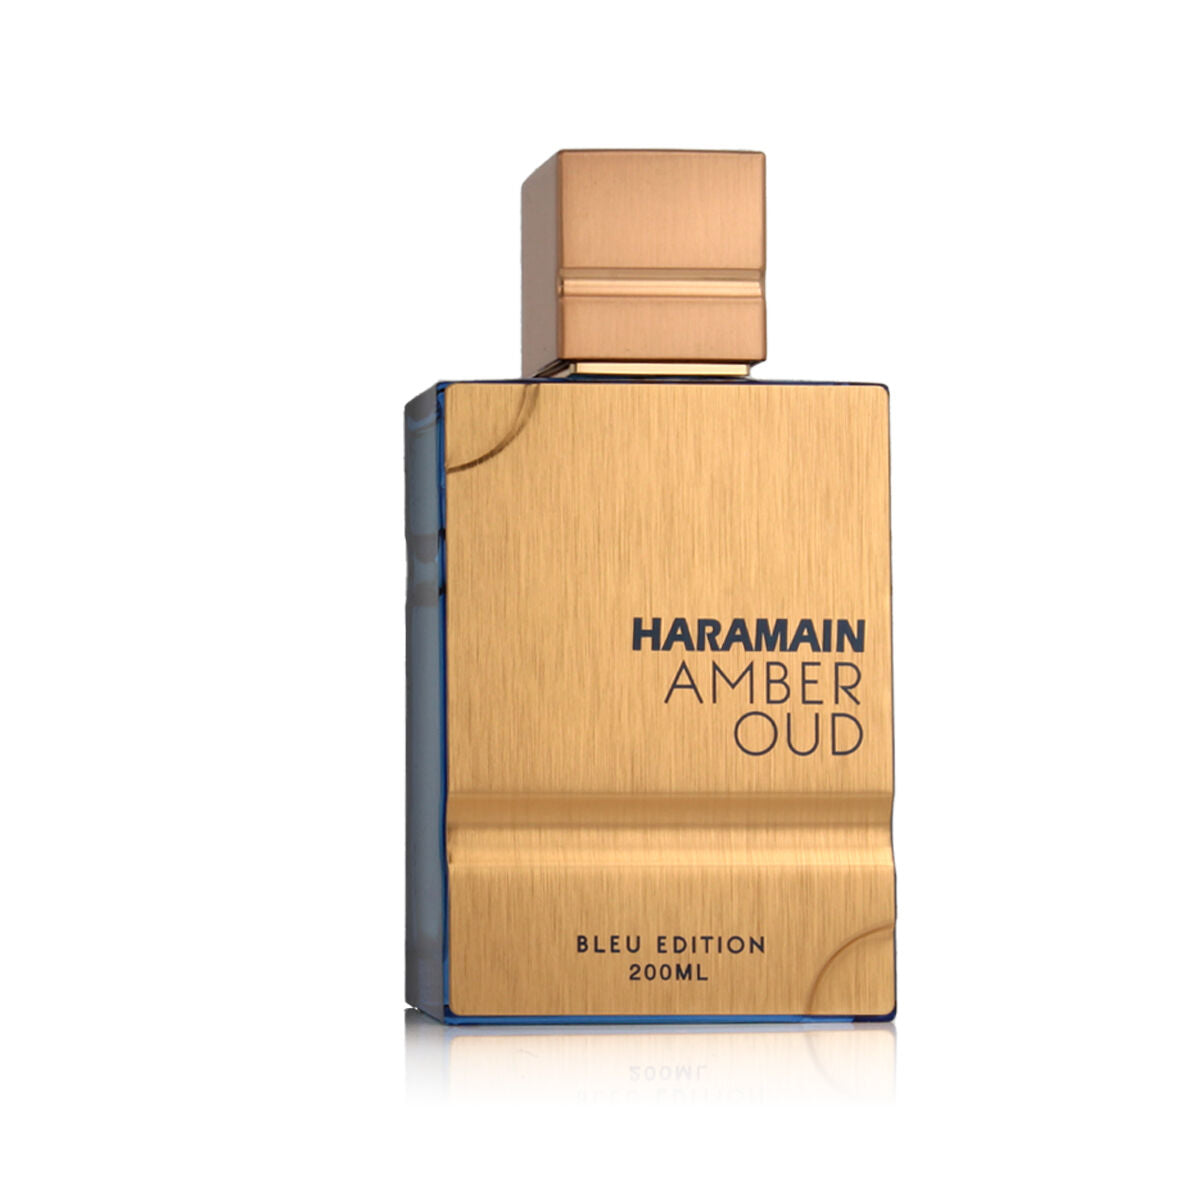 Uniseks Parfum Al Haramain EDP Amber Oud Bleu Edition 200 ml